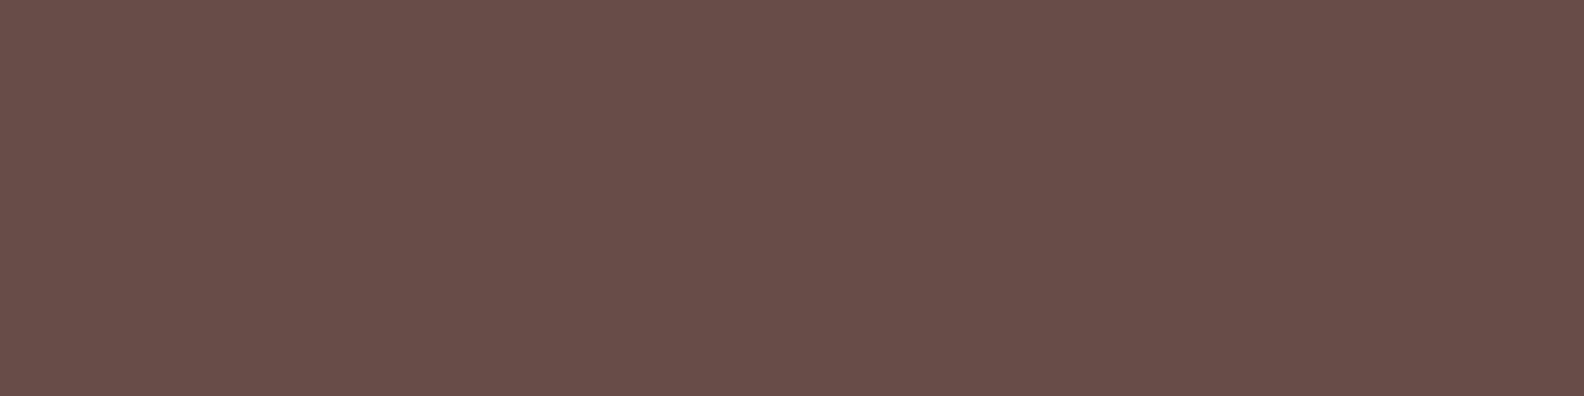 1584x396 Liver Solid Color Background